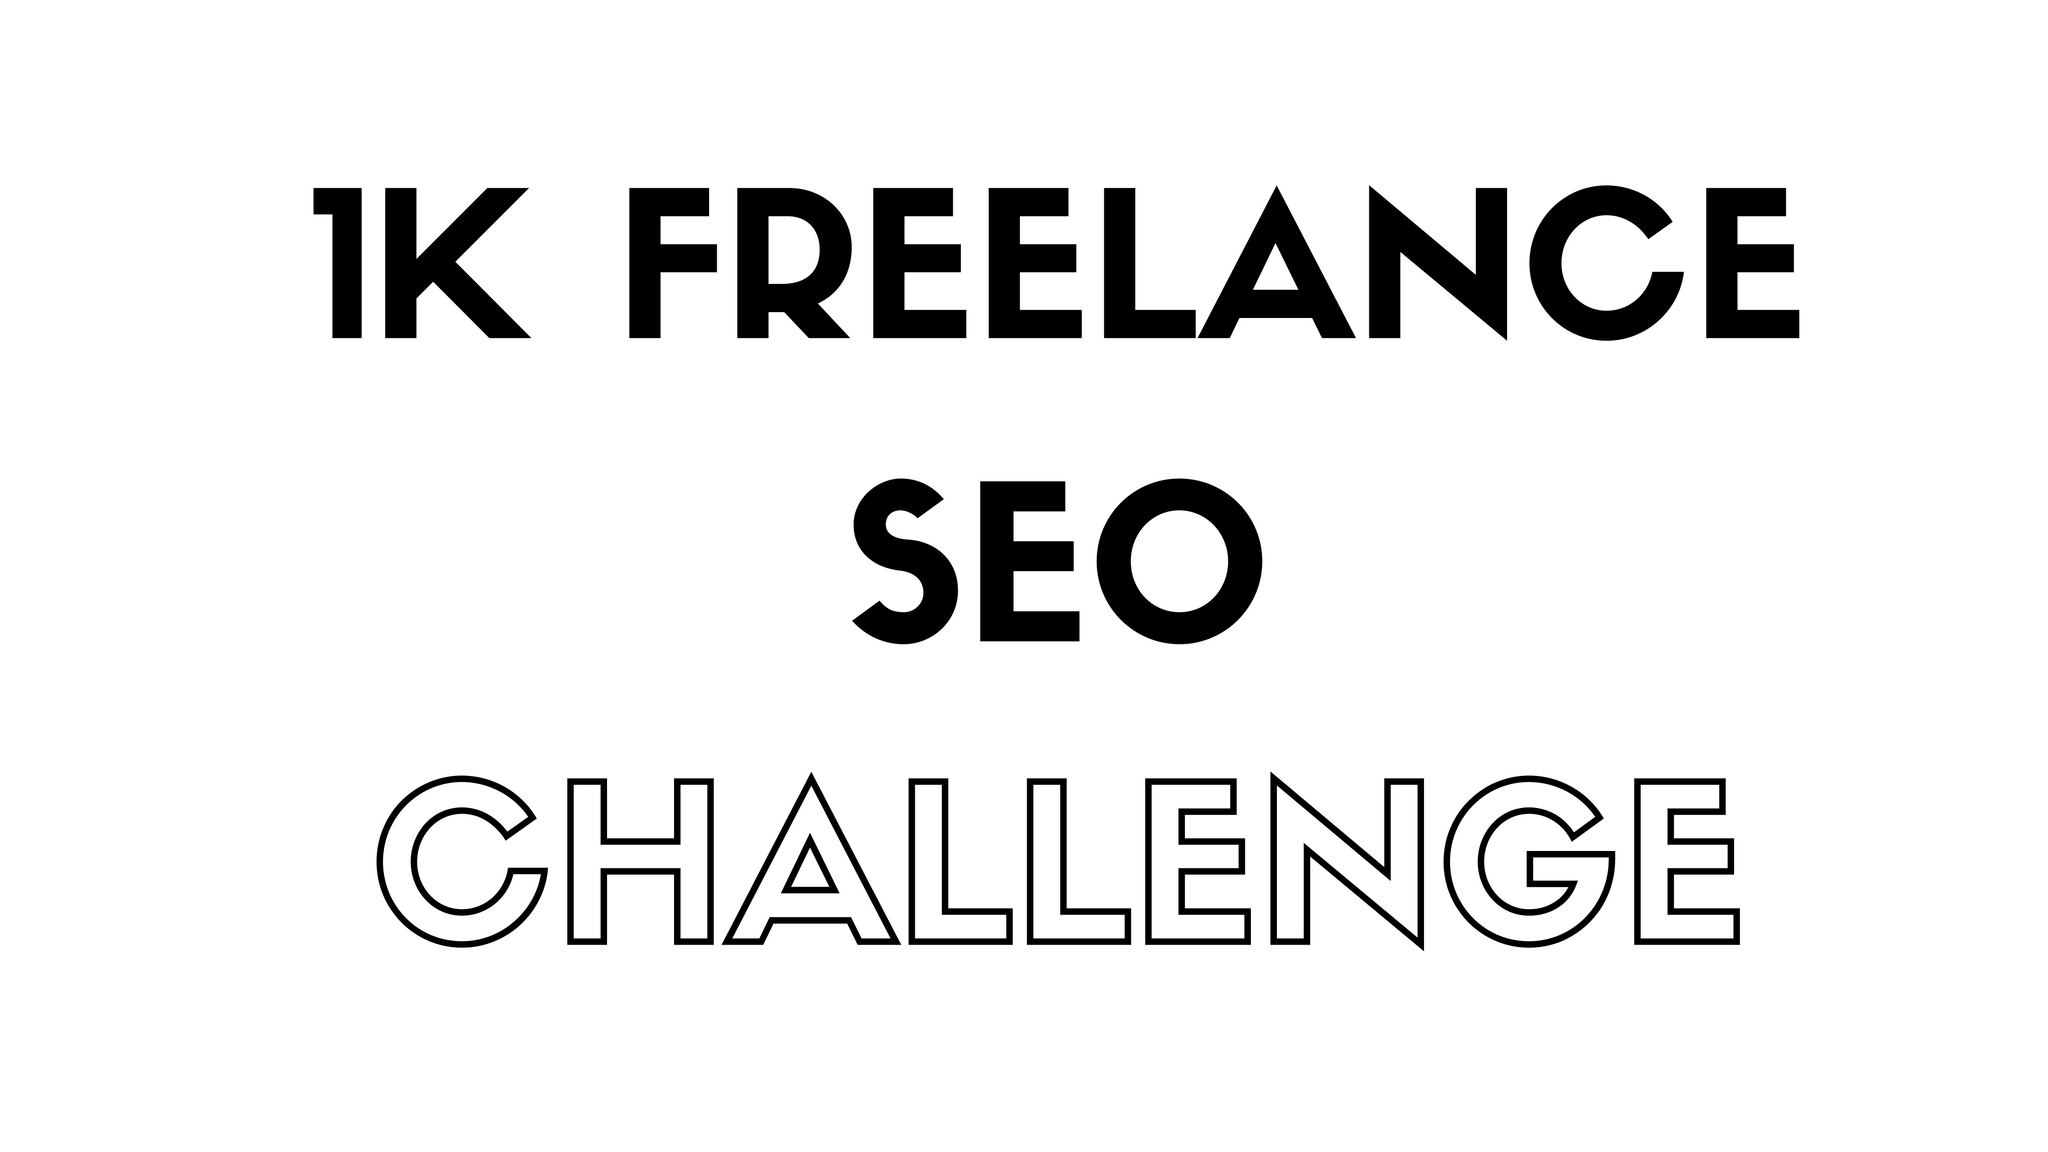 1k Freelance SEO Challenge